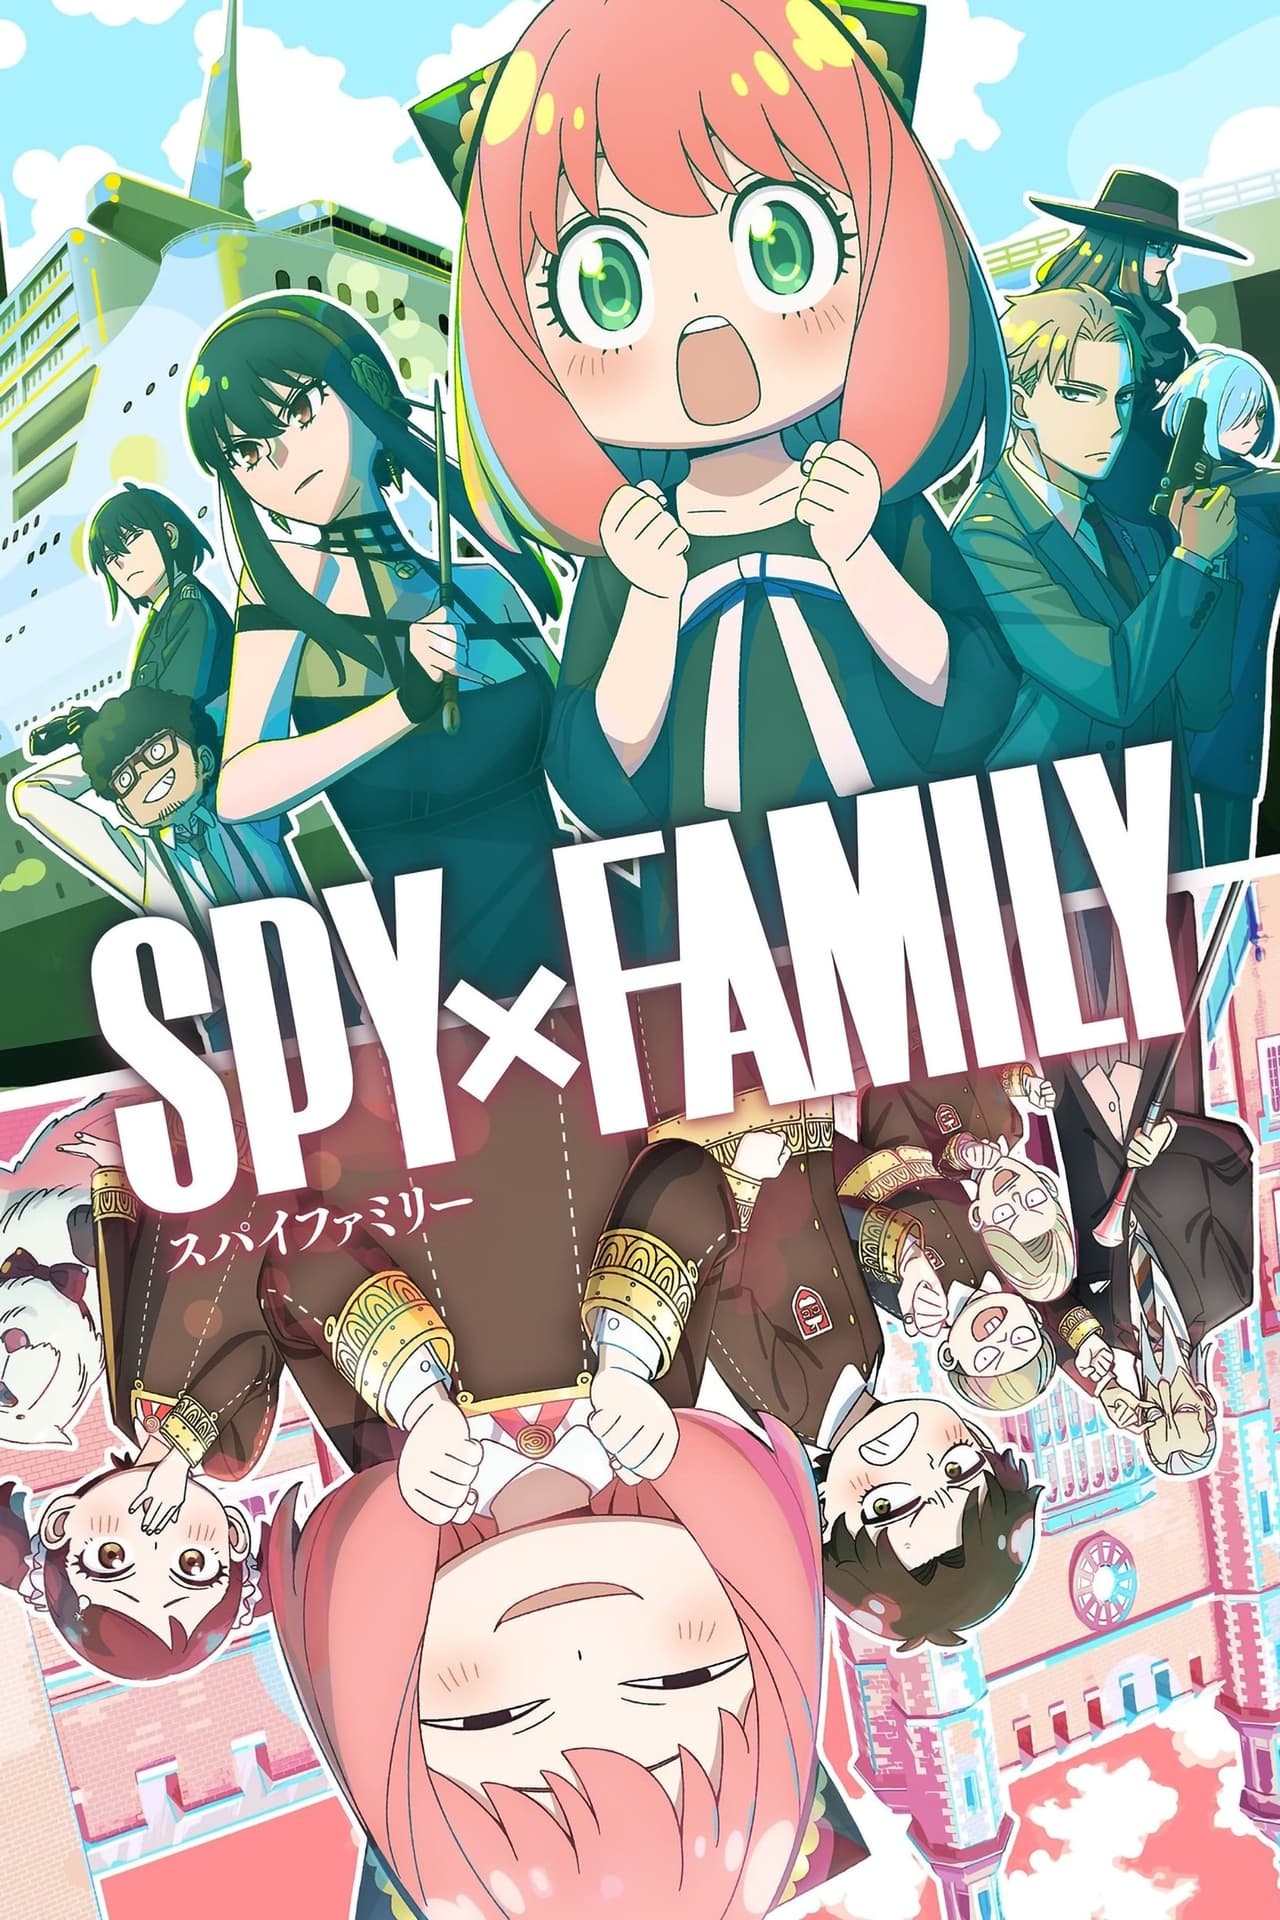 Assistir Spy x Family online Grátis